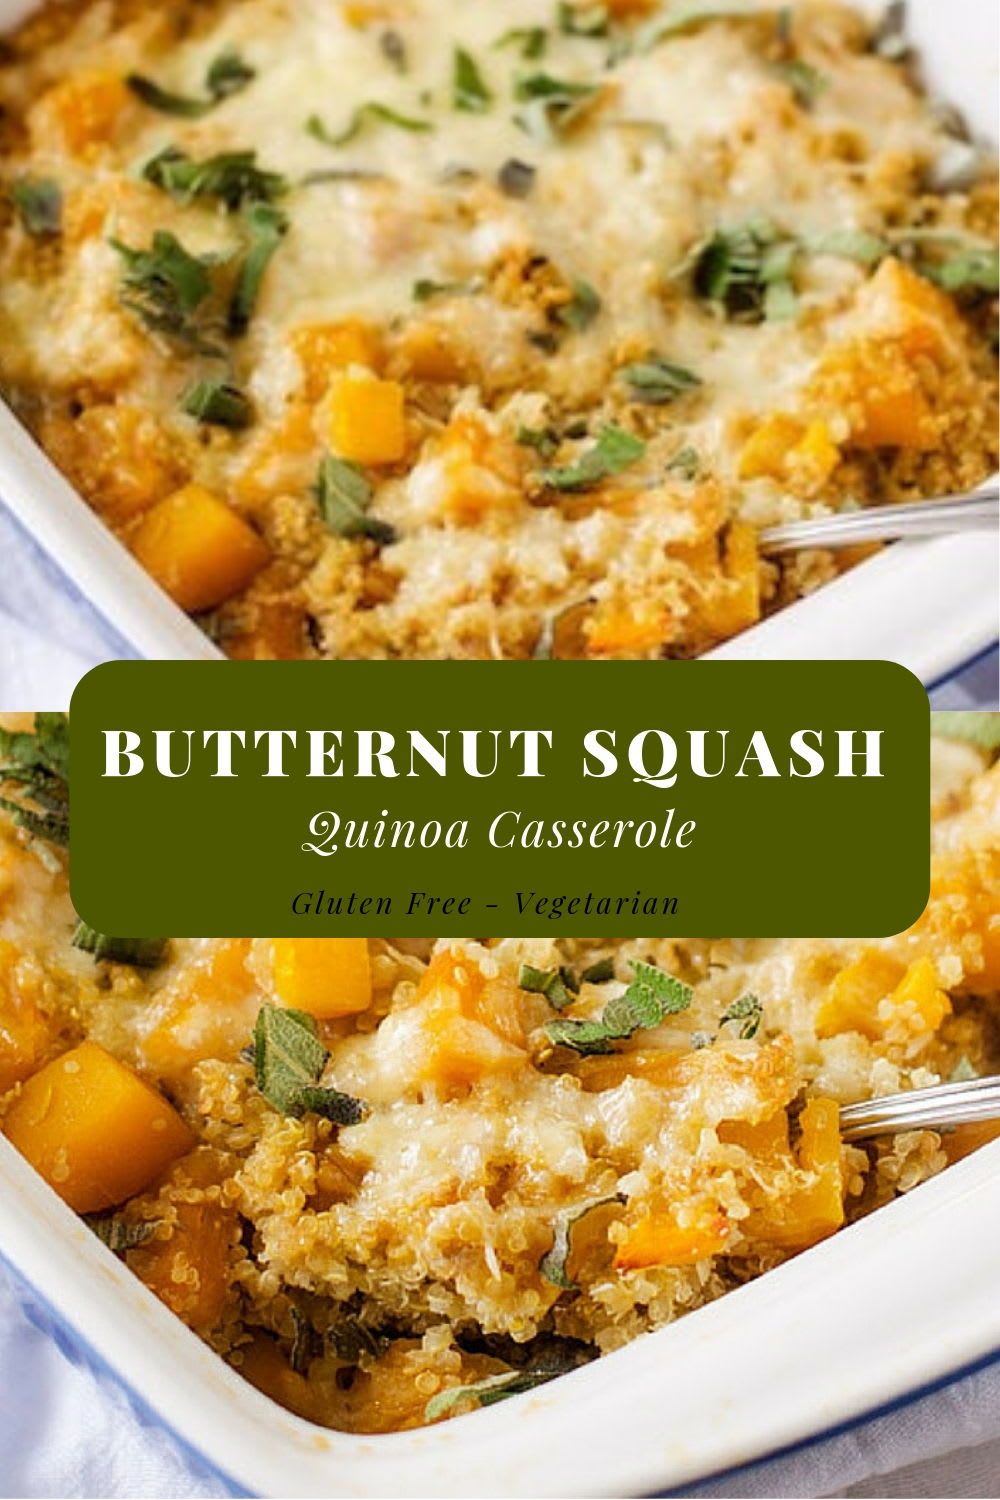 Butternut Squash Quinoa Casserole